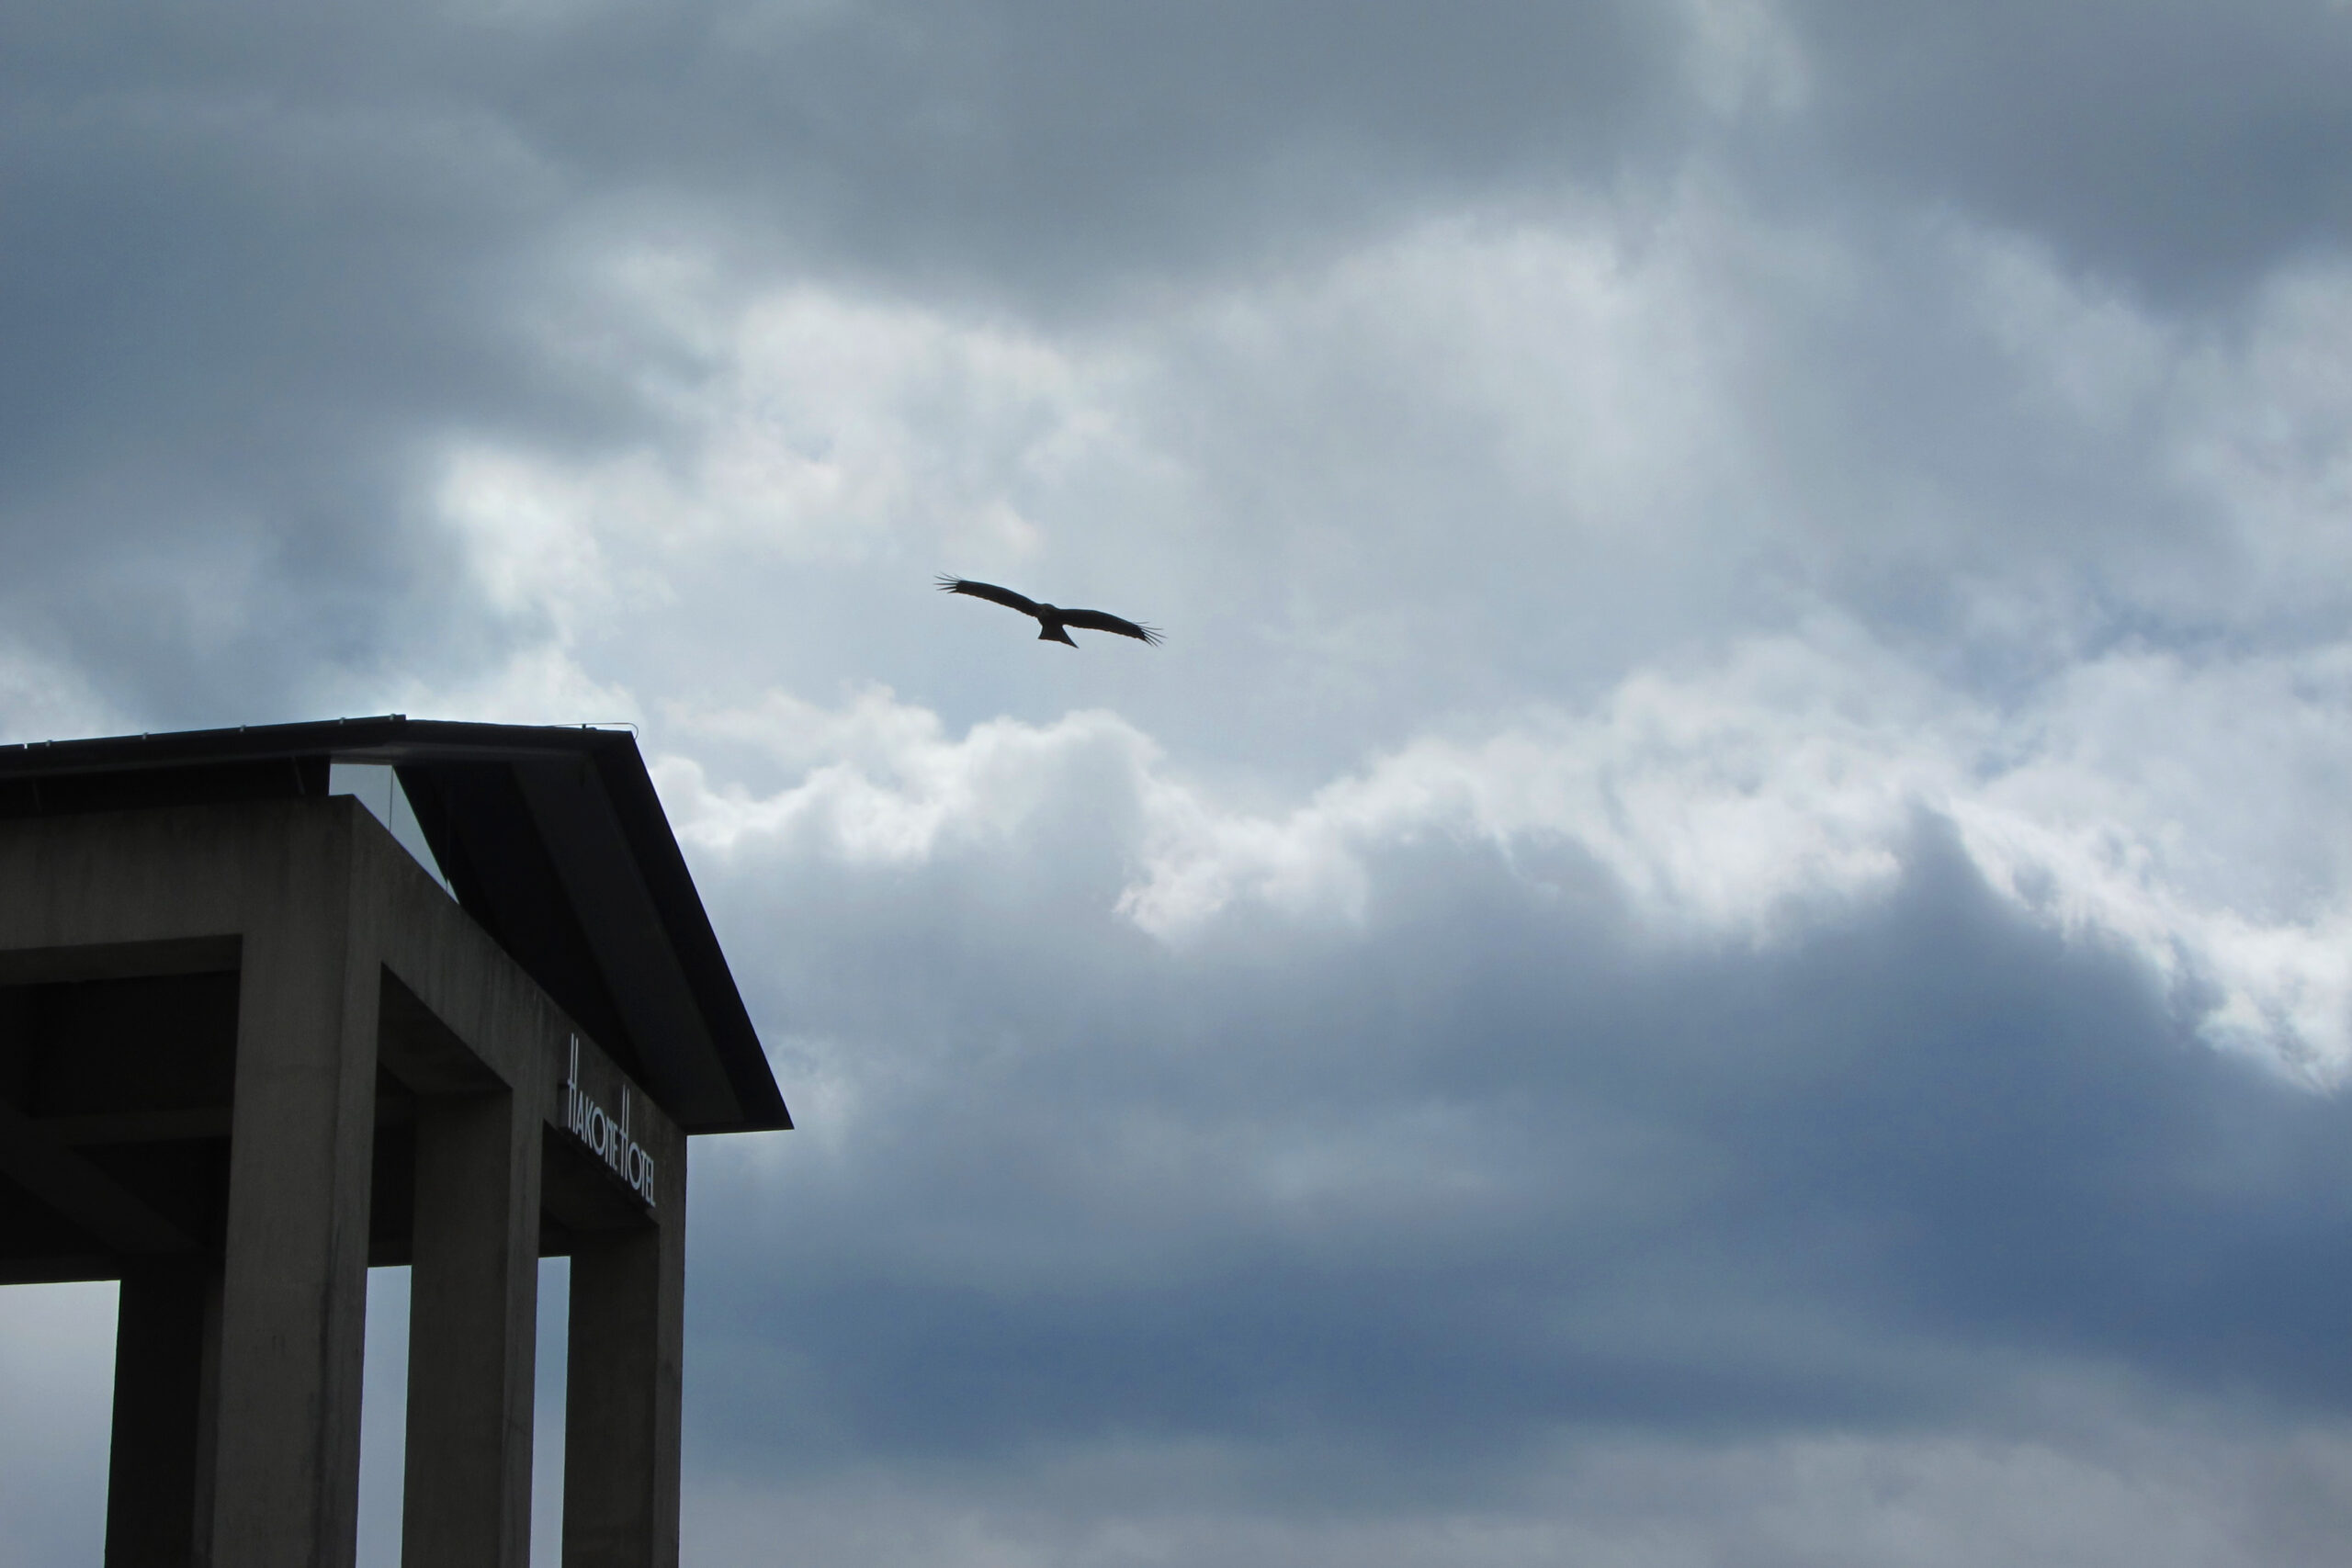 Bird circling overhead, moody clouds